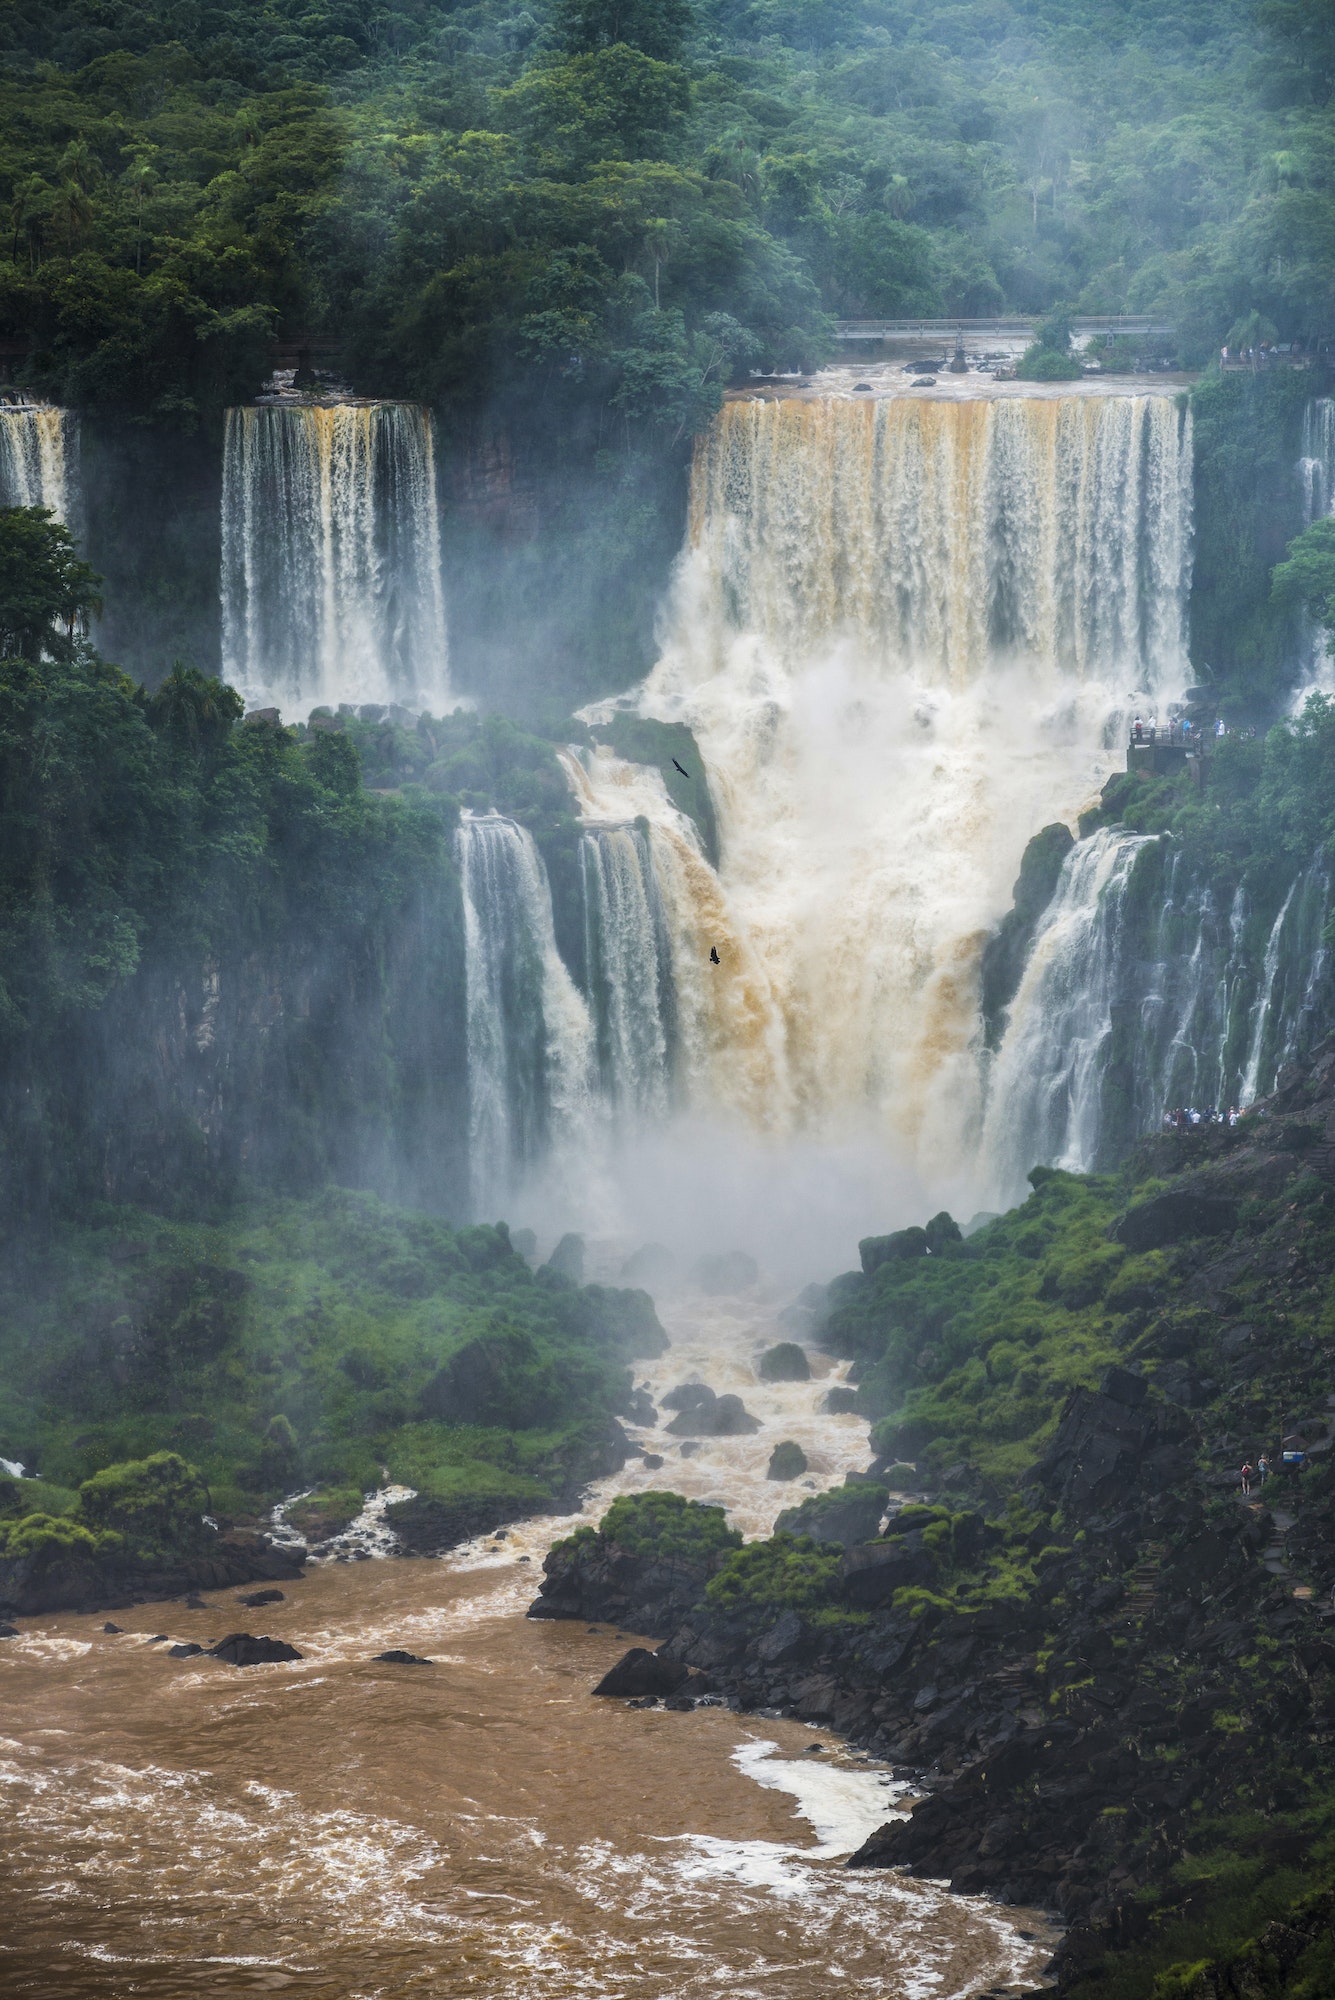 Cascate di Iguazu (Cataratas del Iguacu), lato argentino, viste dal lato brasiliano, Brasile Argentina Pa